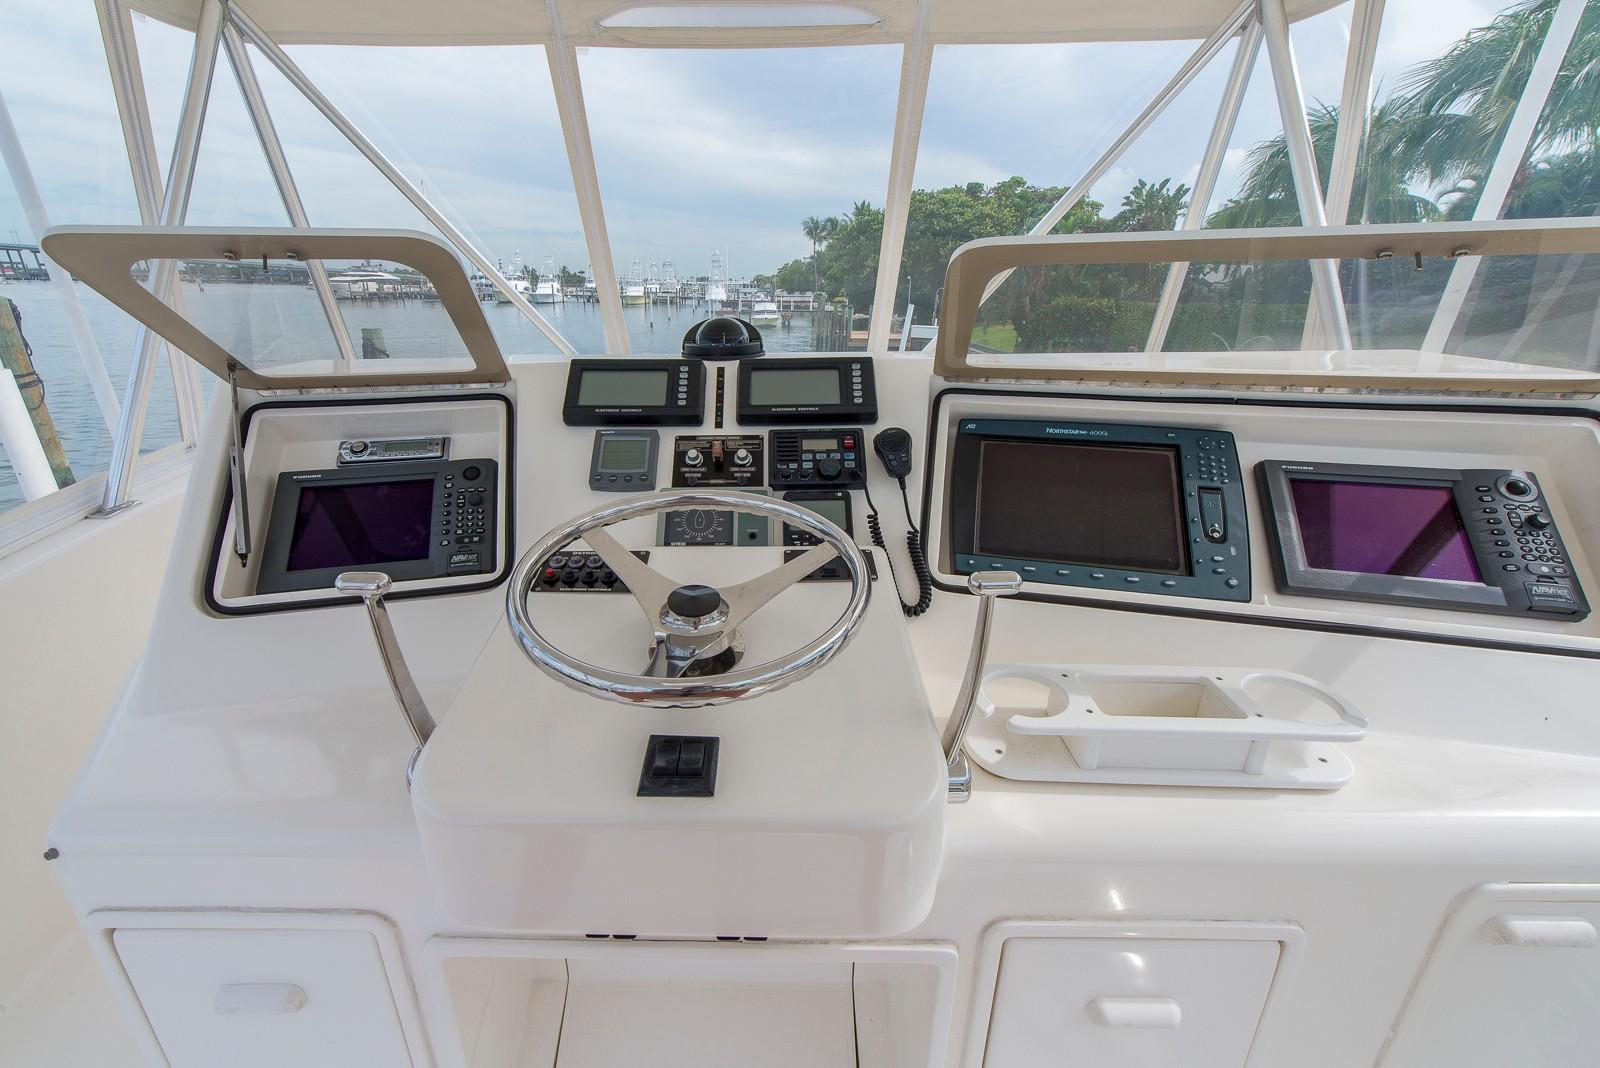 Ocean 46 Kenz Sea -Flybridge, Helm Steering and Electronics